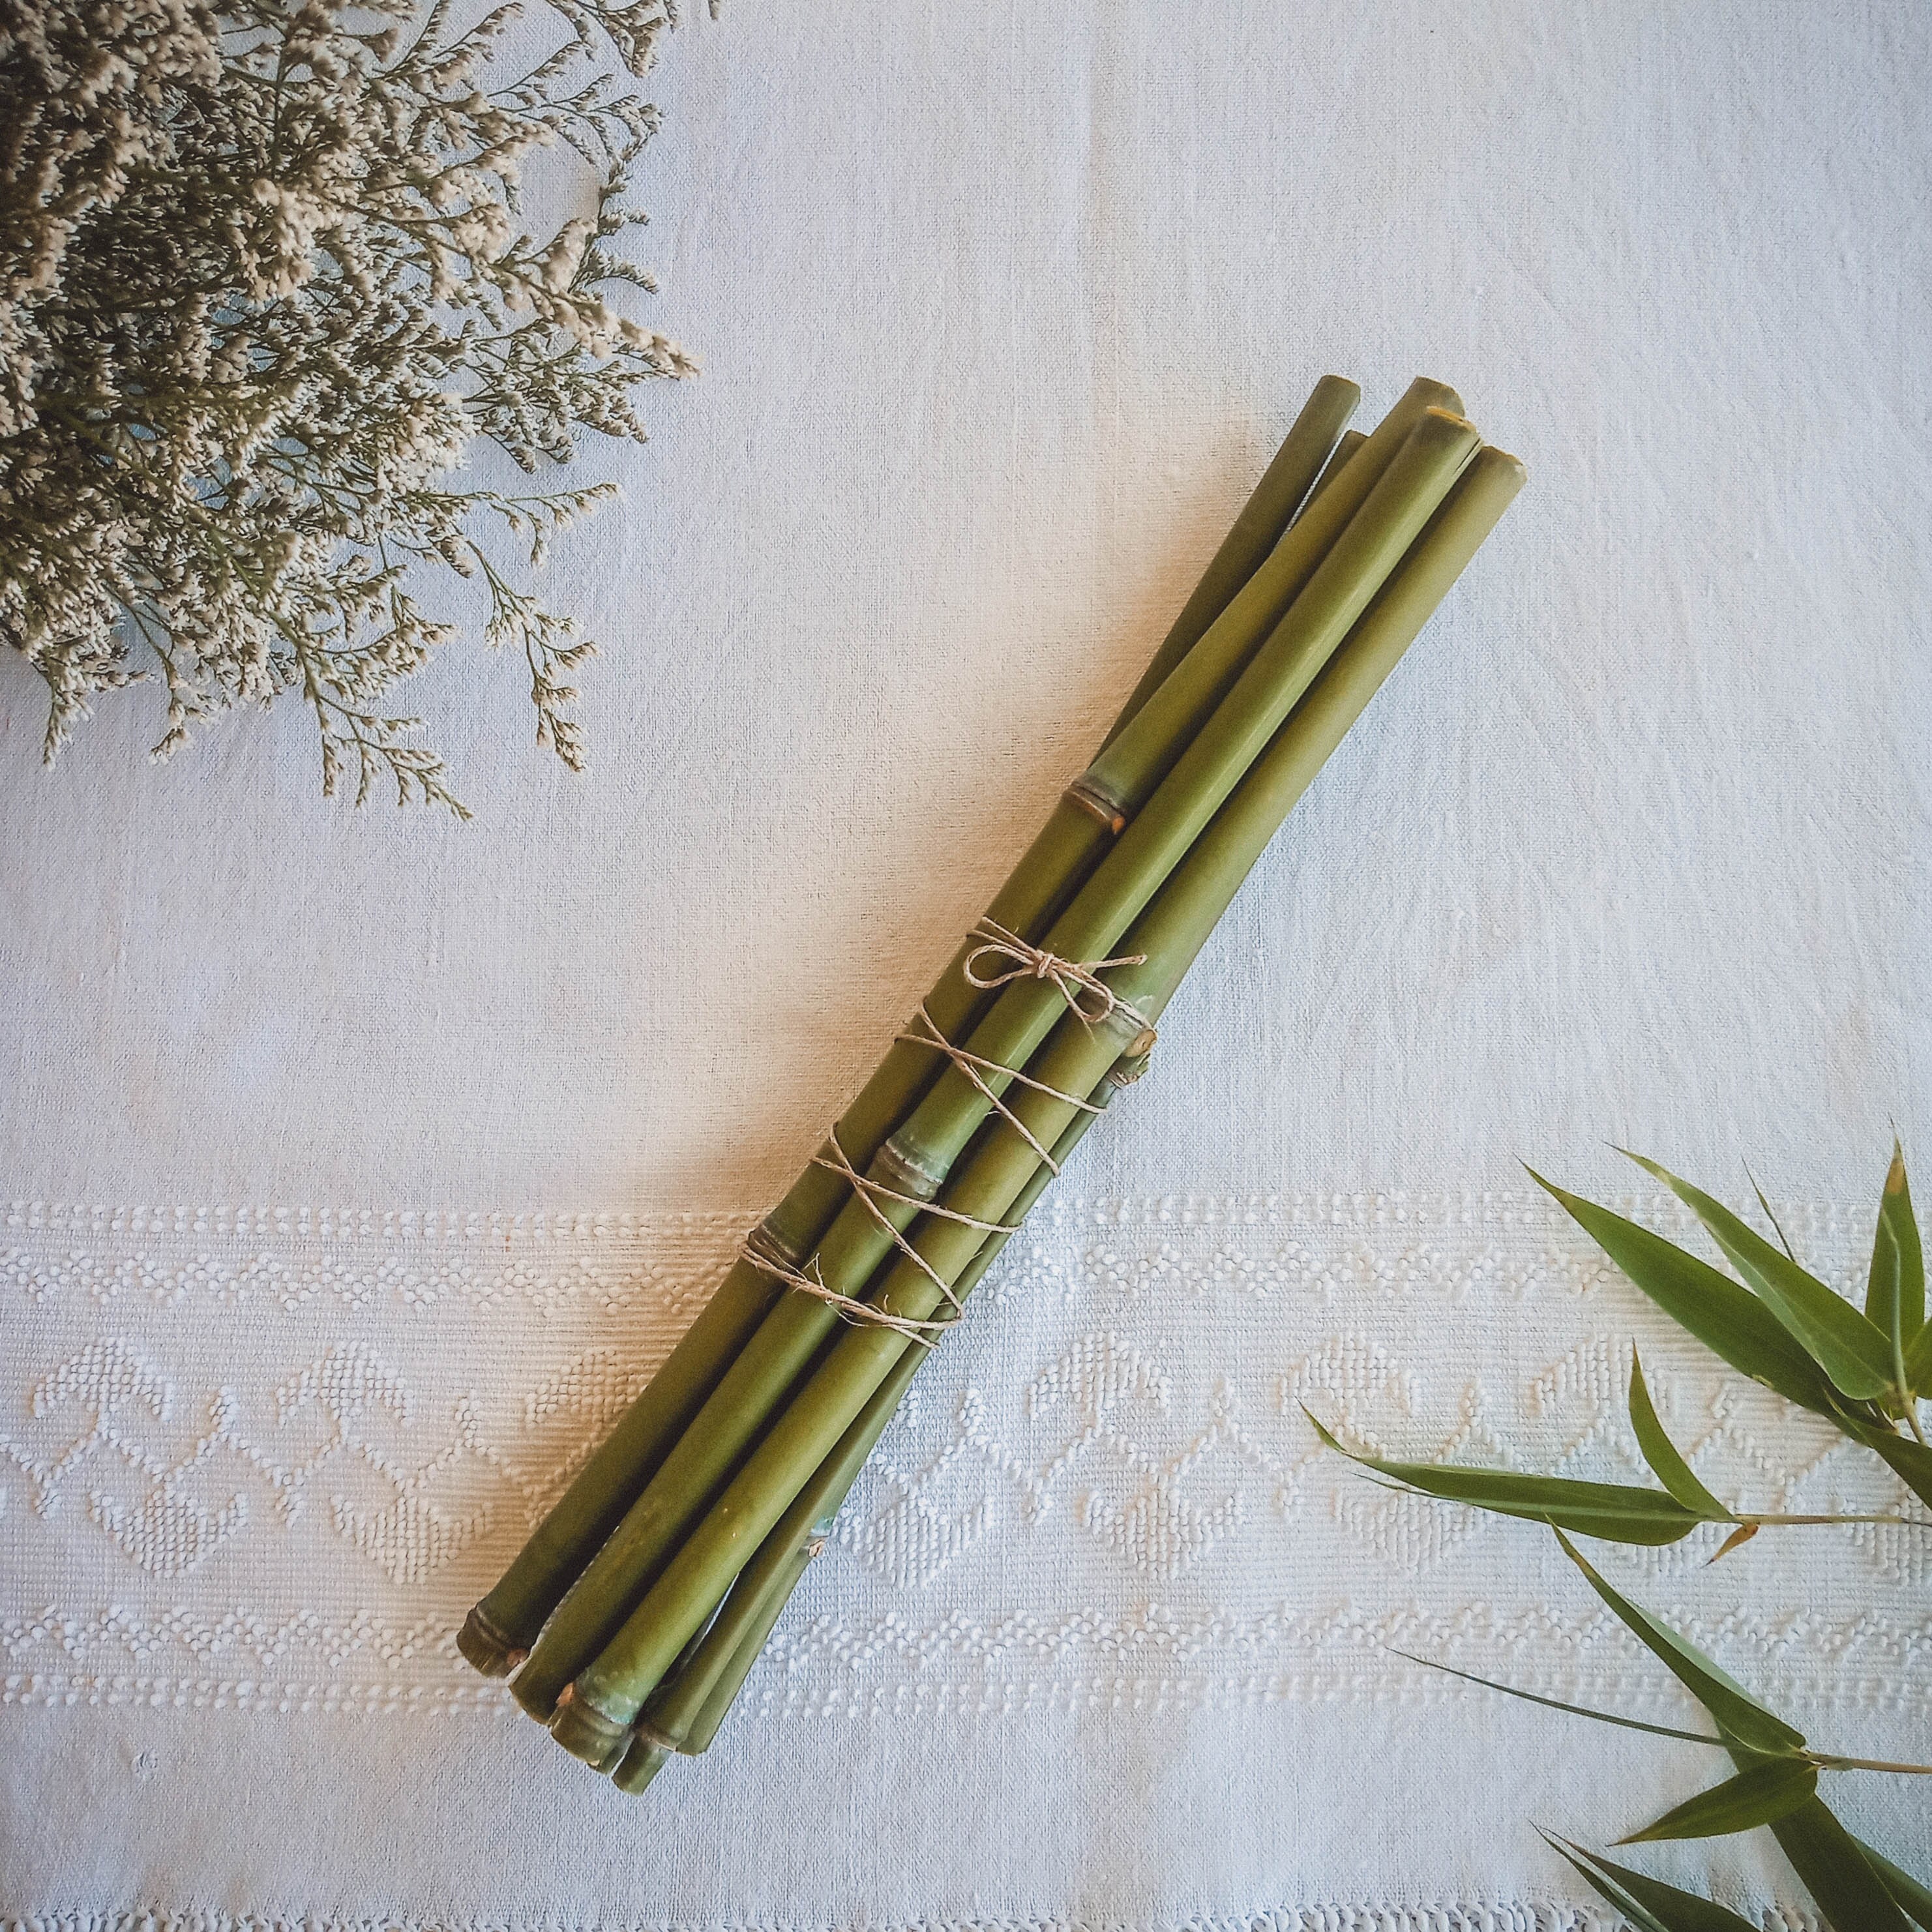 Fansunta 100pcs 15.7x0.35 Inch Strong Natural Bamboo Sticks, Wooden Craft  Sticks, Extra Long Sticks, Wood Strips for Craft Projects